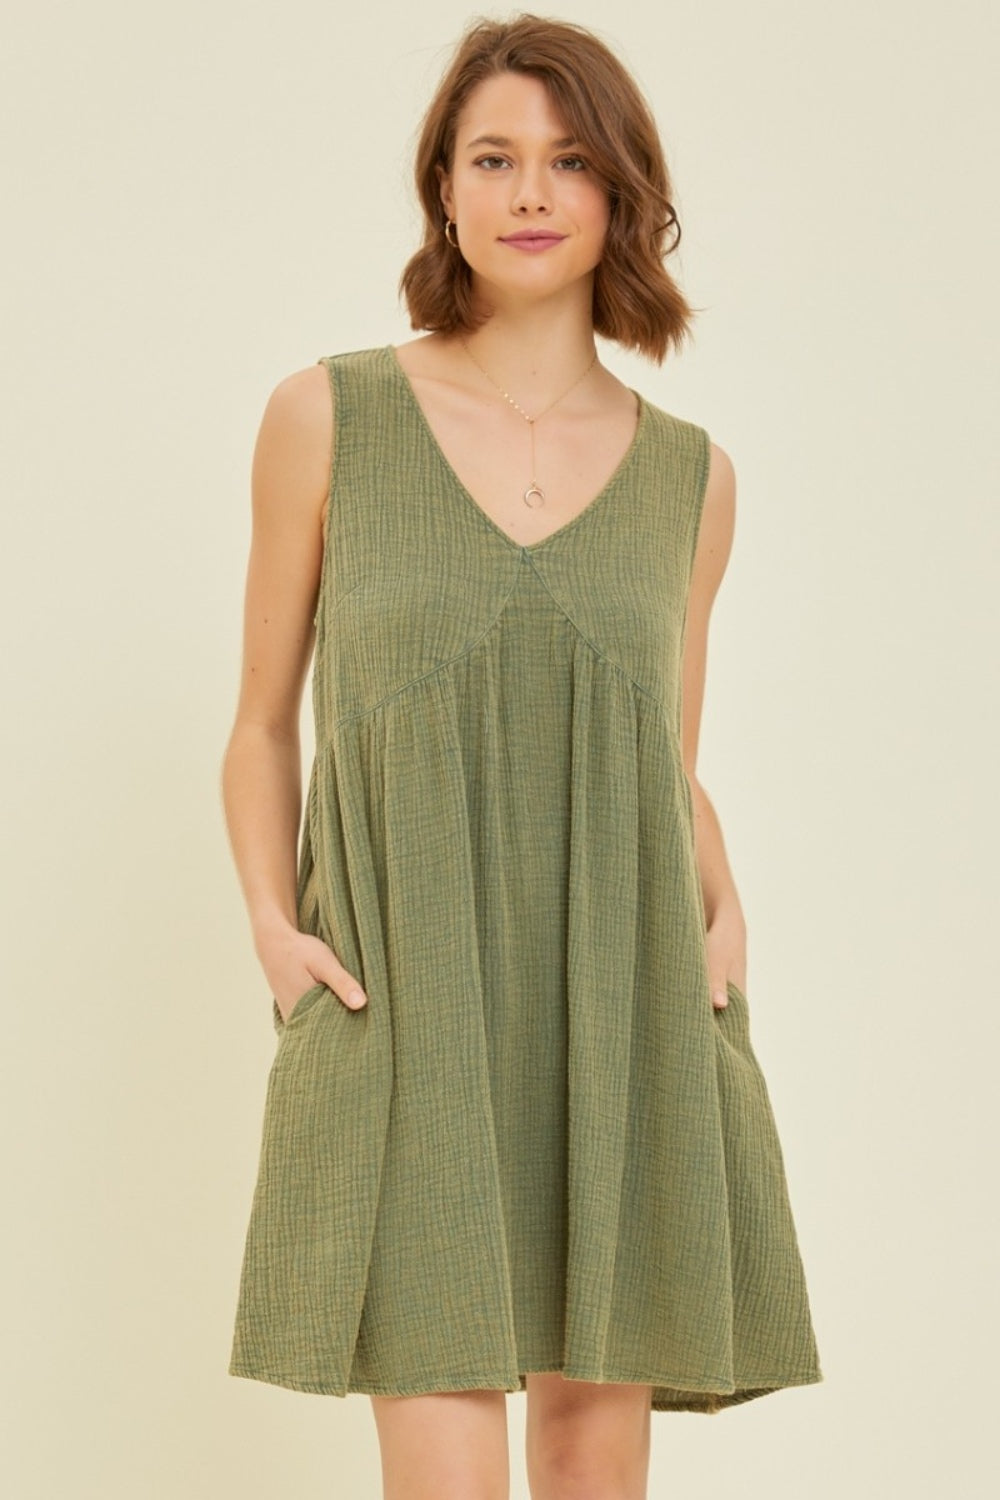 HEYSON Full Size Chic Texture V-Neck Sleeveless Flare Mini Dress - An Elegant Addition to Your Clothing Set